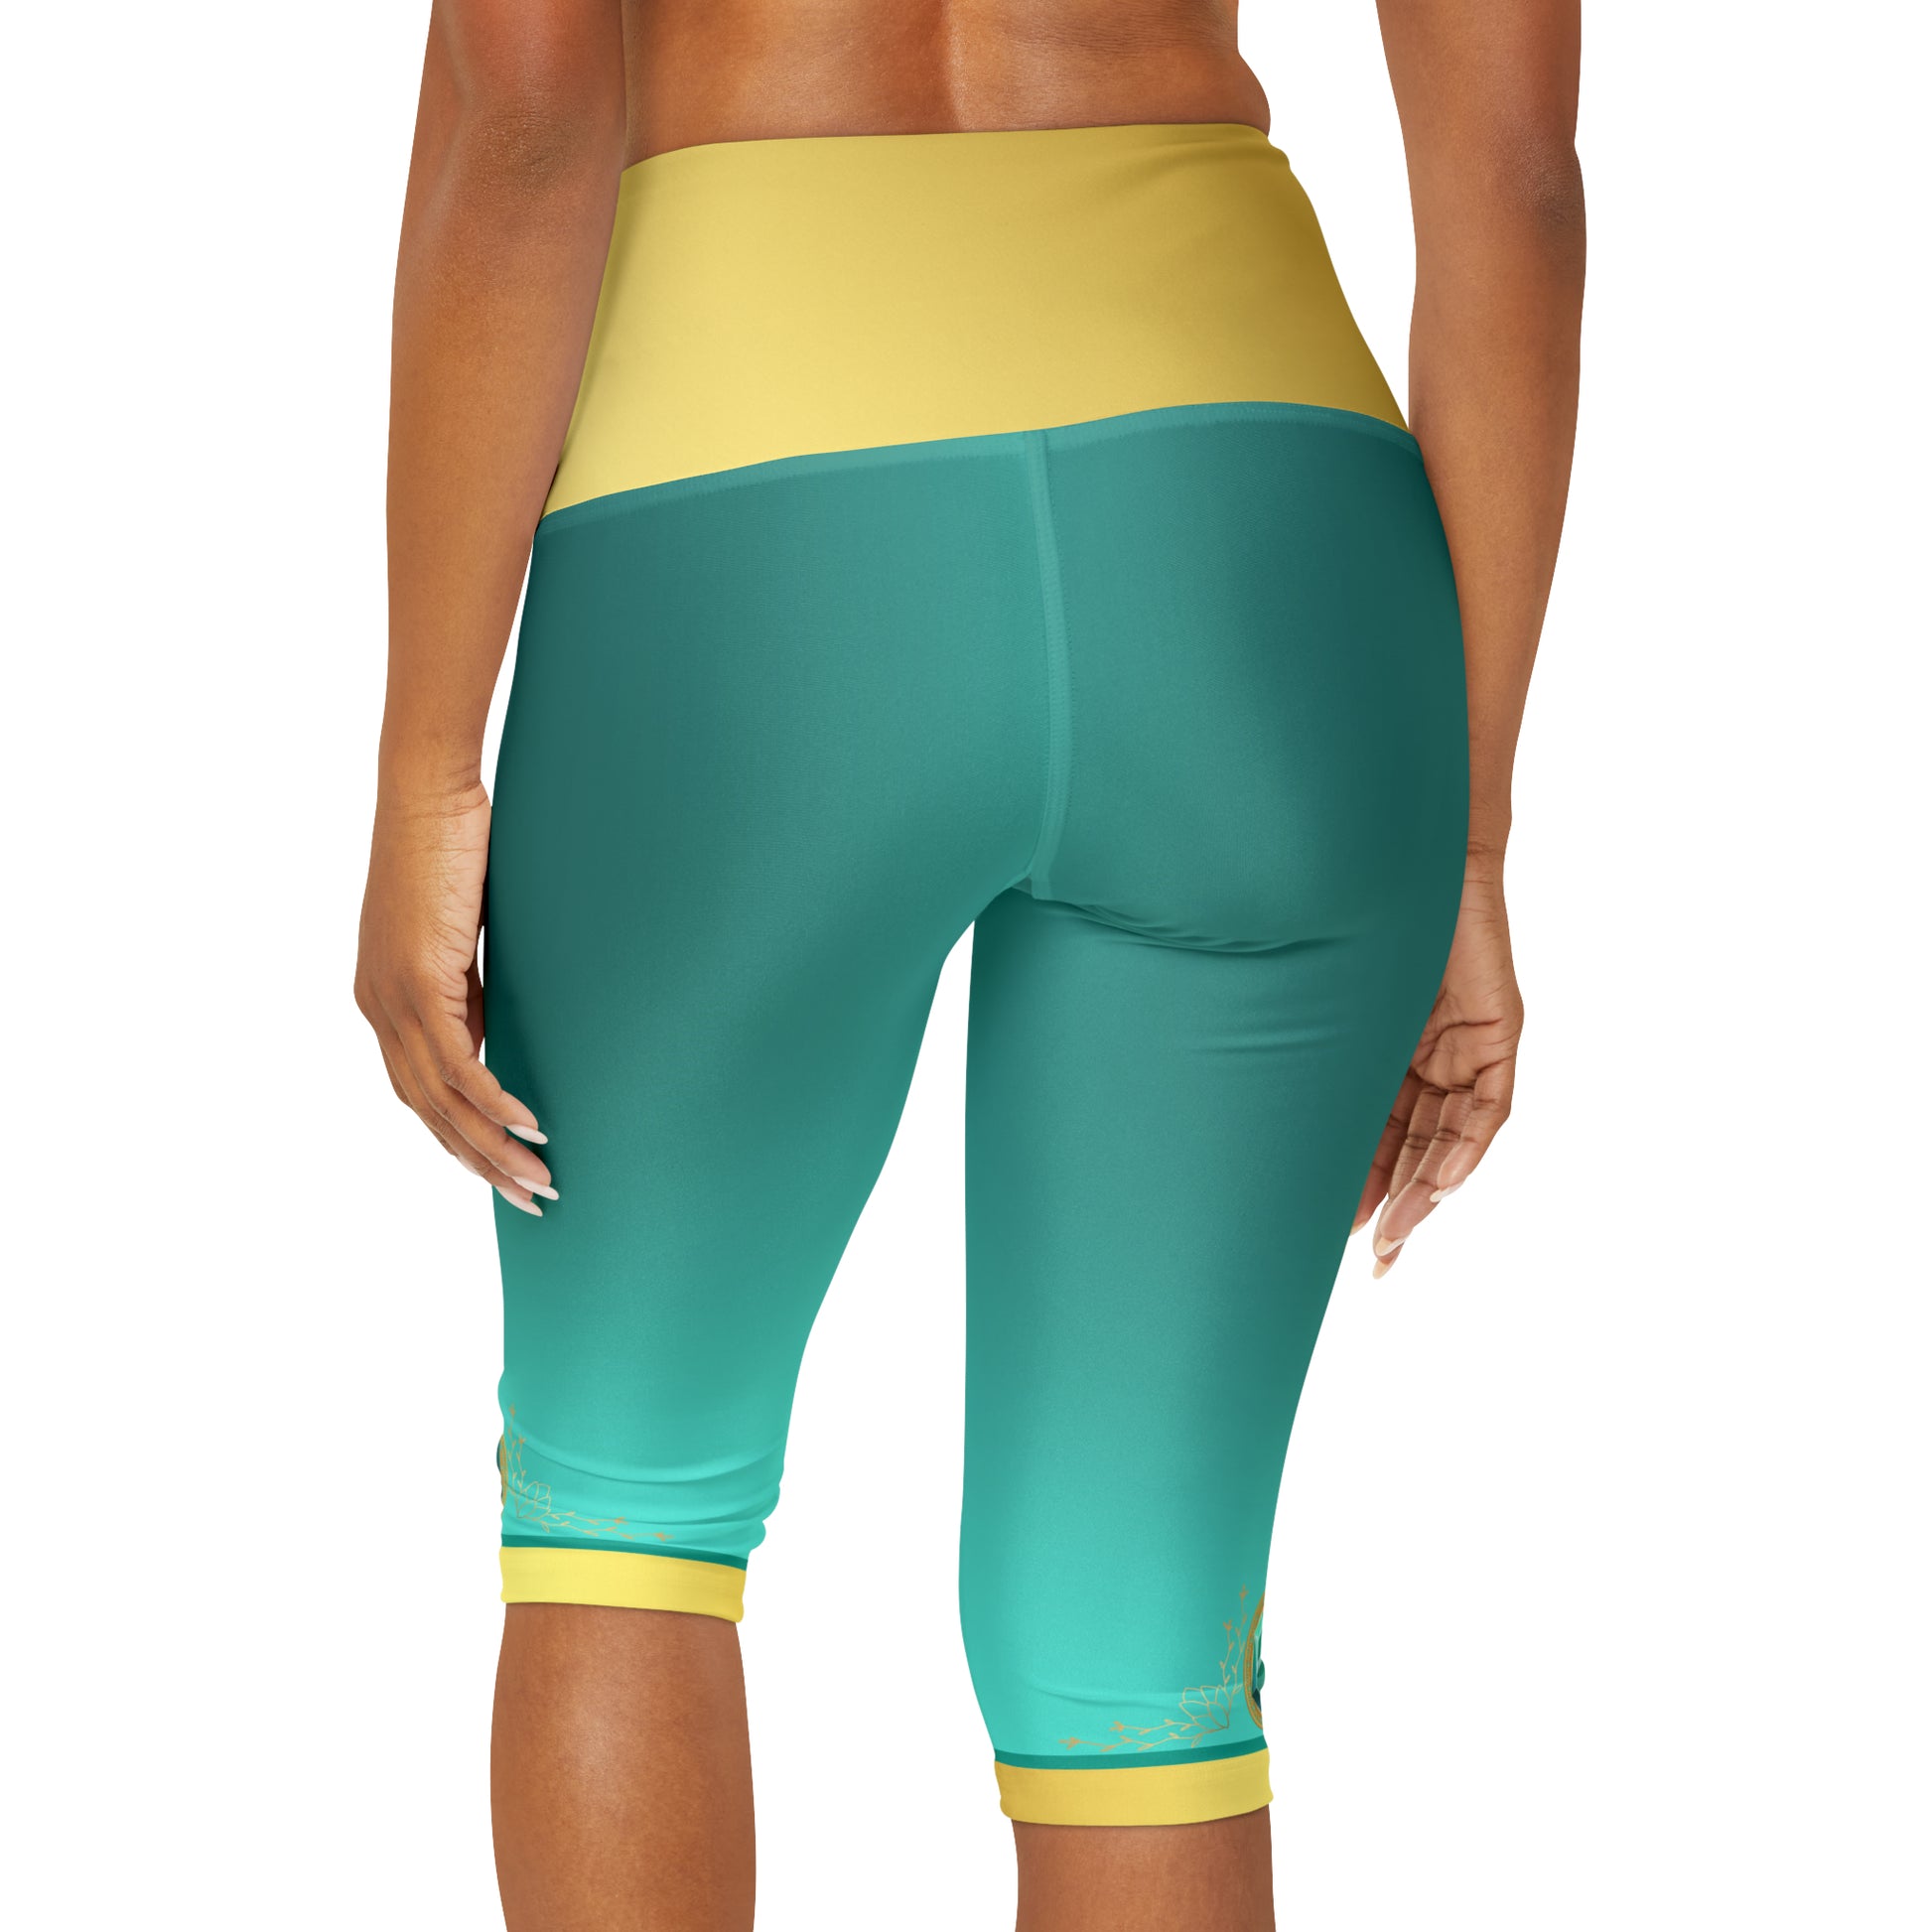 Jasmine Yoga Capri Leggings- Running Costume, Cosplay, Park Wear active wearAladdinAll Over Print#tag4##tag5##tag6#